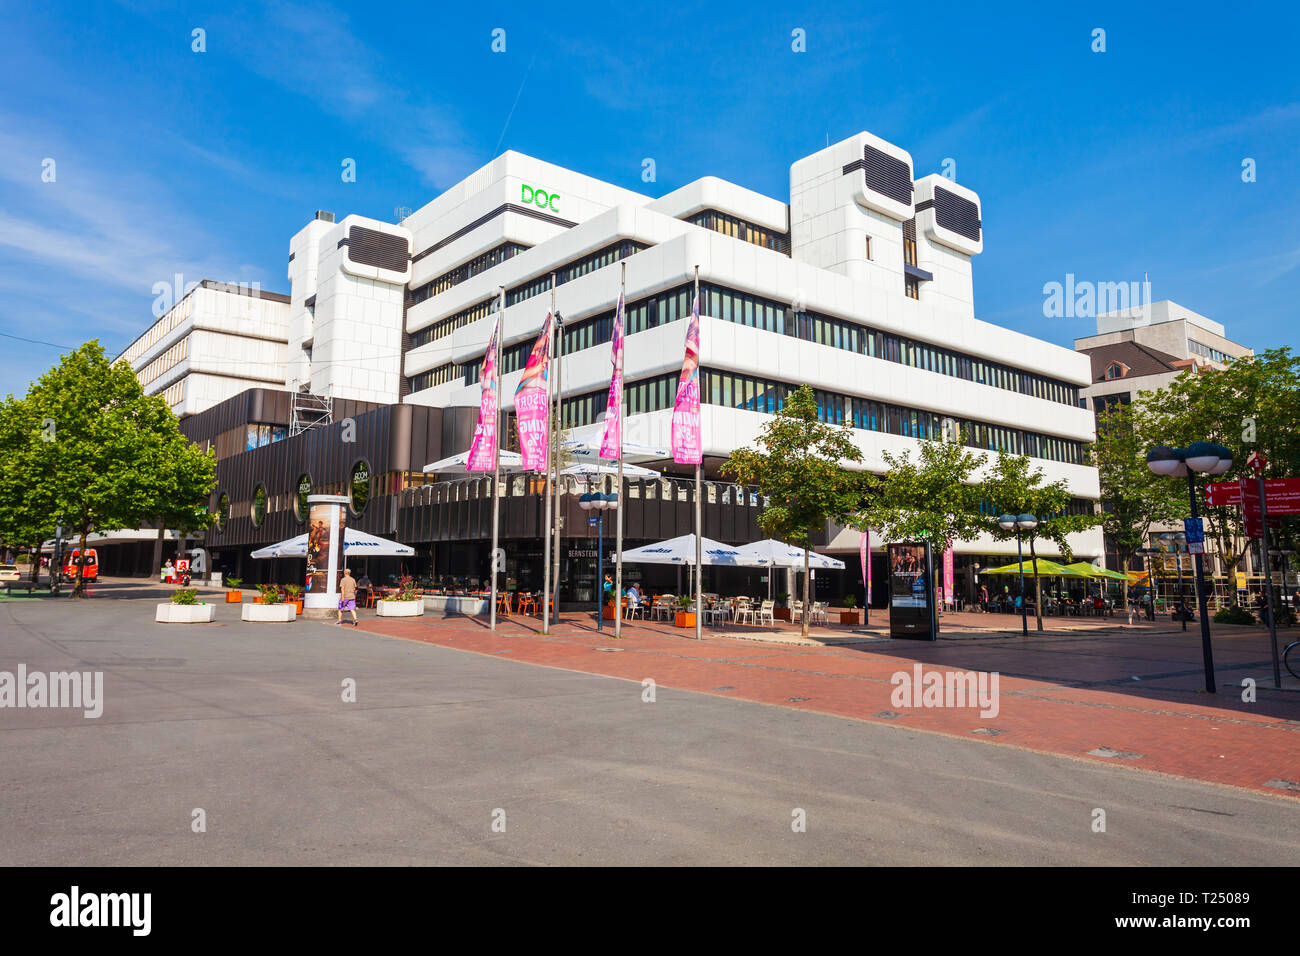 DORTMUND, GERMANY - JULY 04, 2018: DOC building is diagnostic center for Medicine and Health in Dortmund Stock Photo